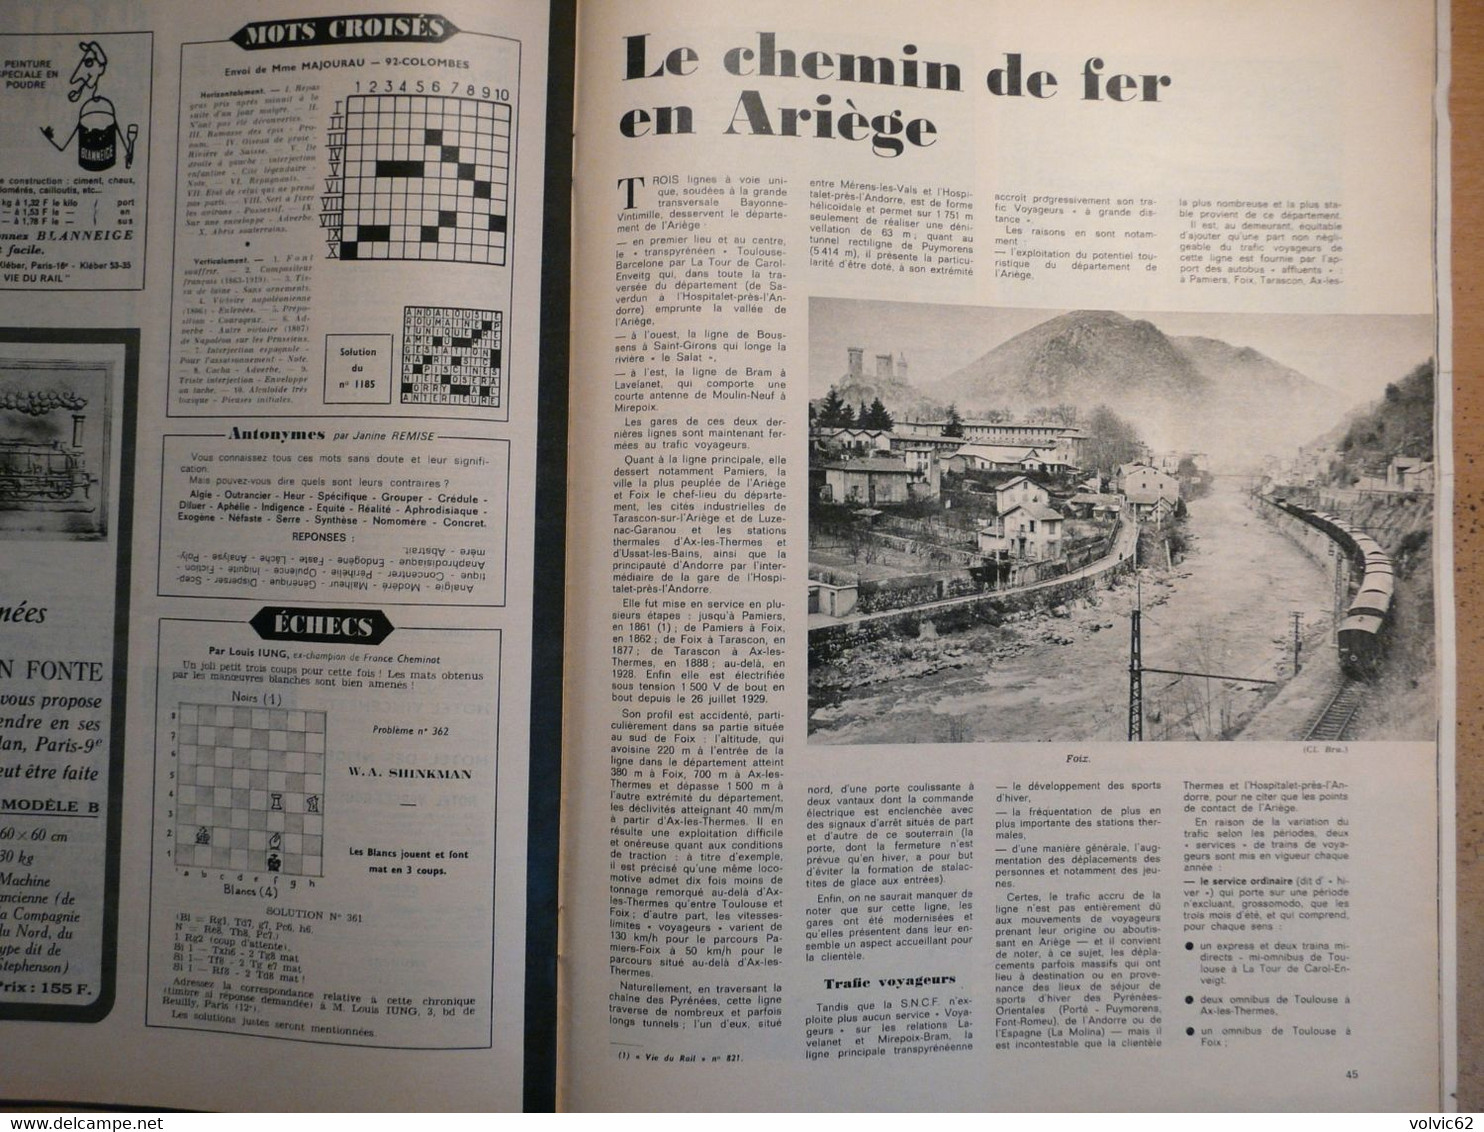 Vie du Rail 1186 mars 1969 Ariège foix pamiers mirepoix unac lérida  montségur tarascon  montgailhard prayols 40 pages